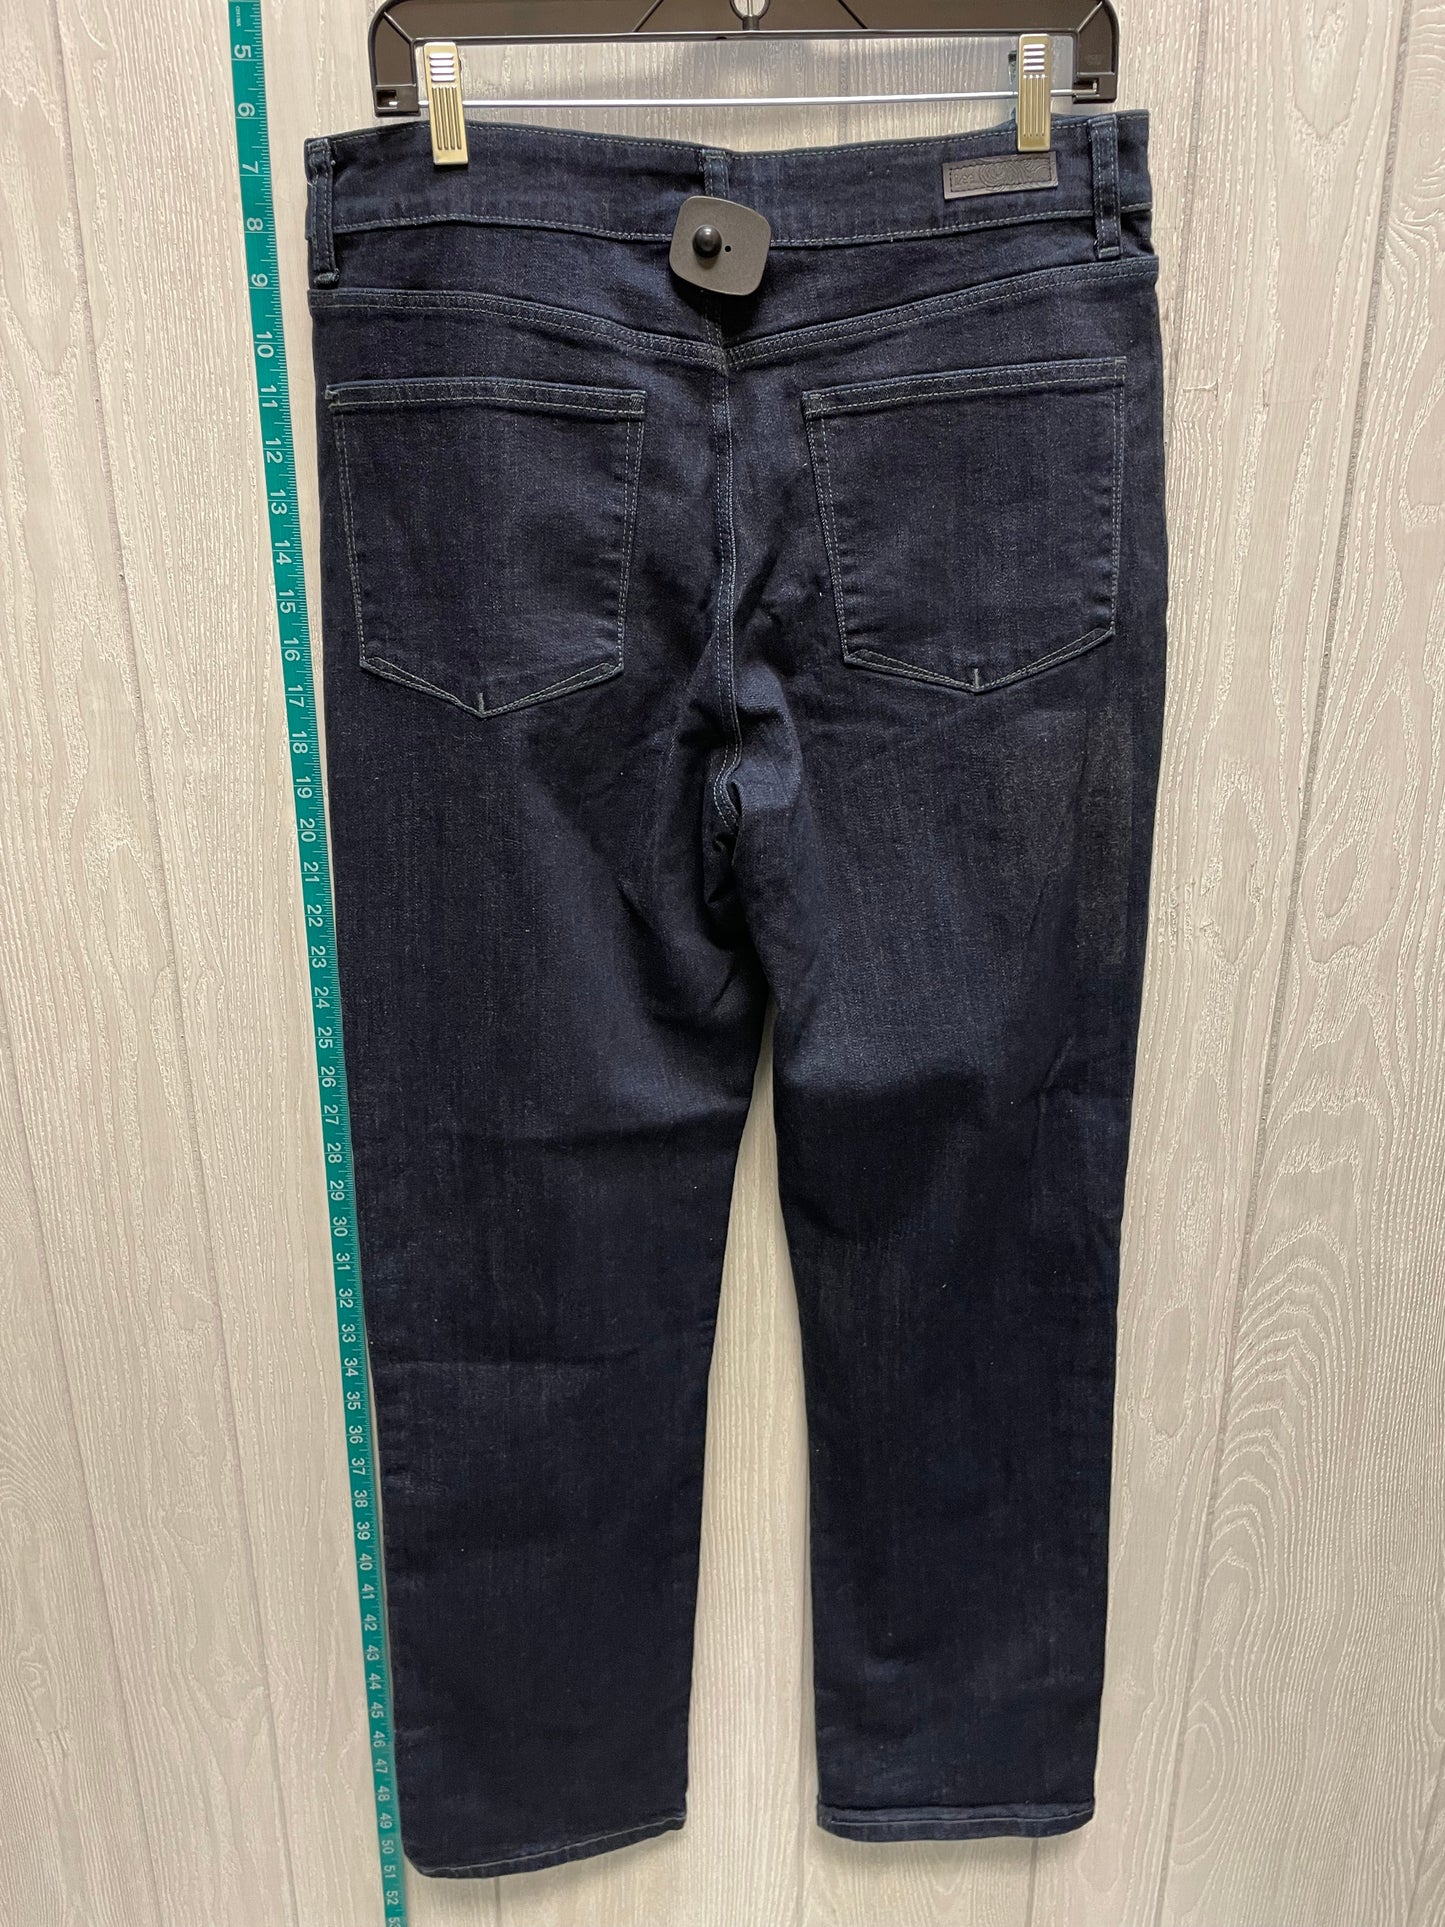 Blue Denim Jeans Straight Lee, Size 14